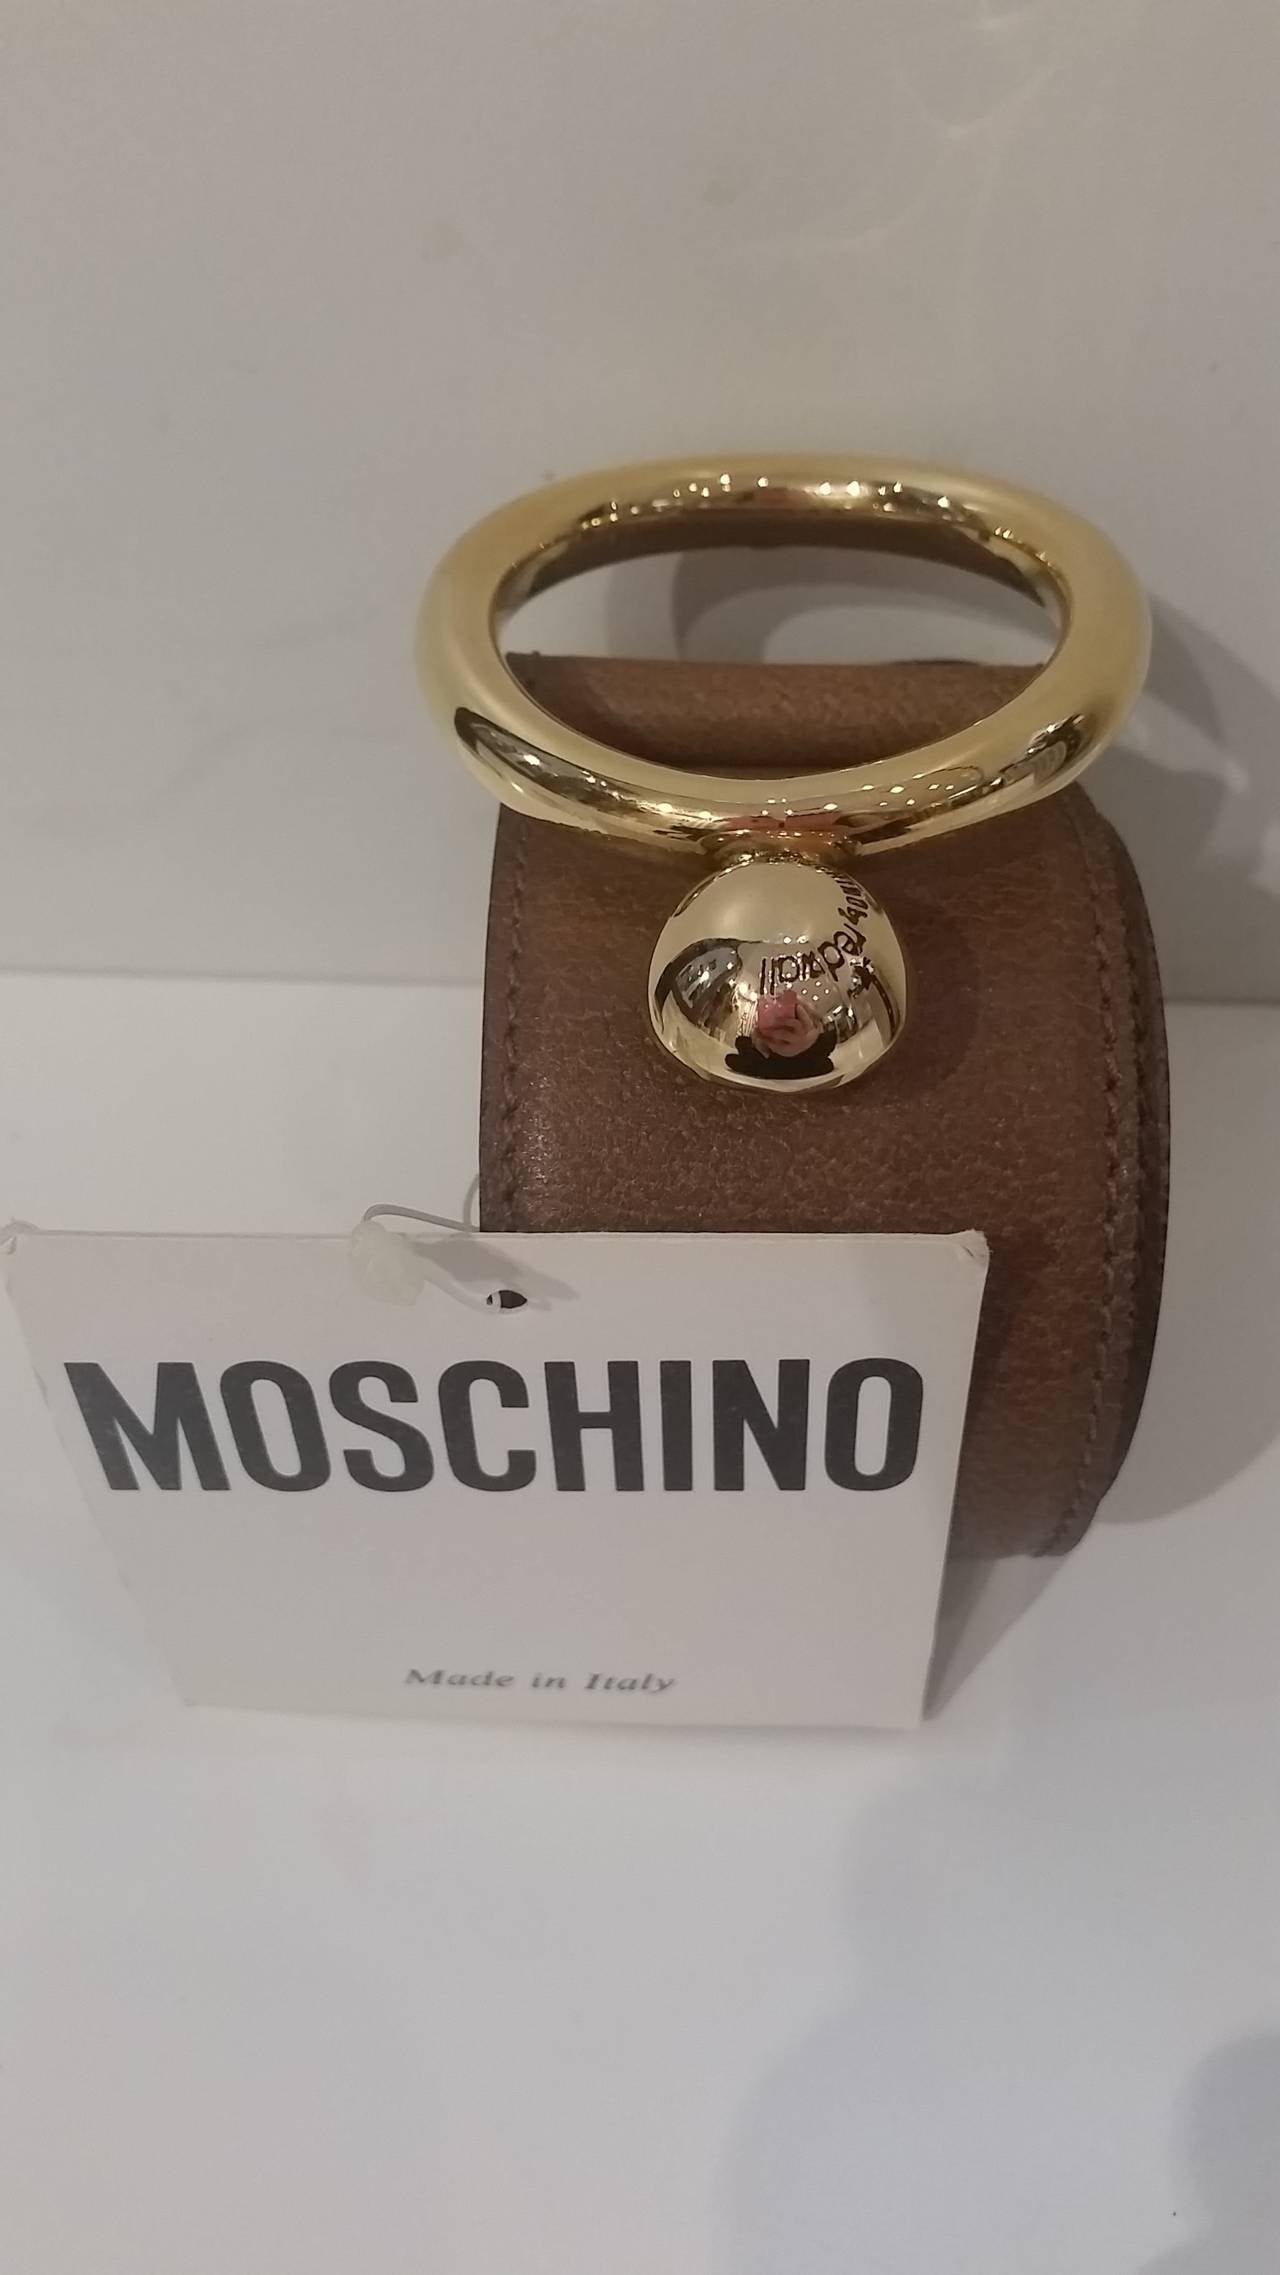 1970s Moschino brown leather belt 
Italian size range 44